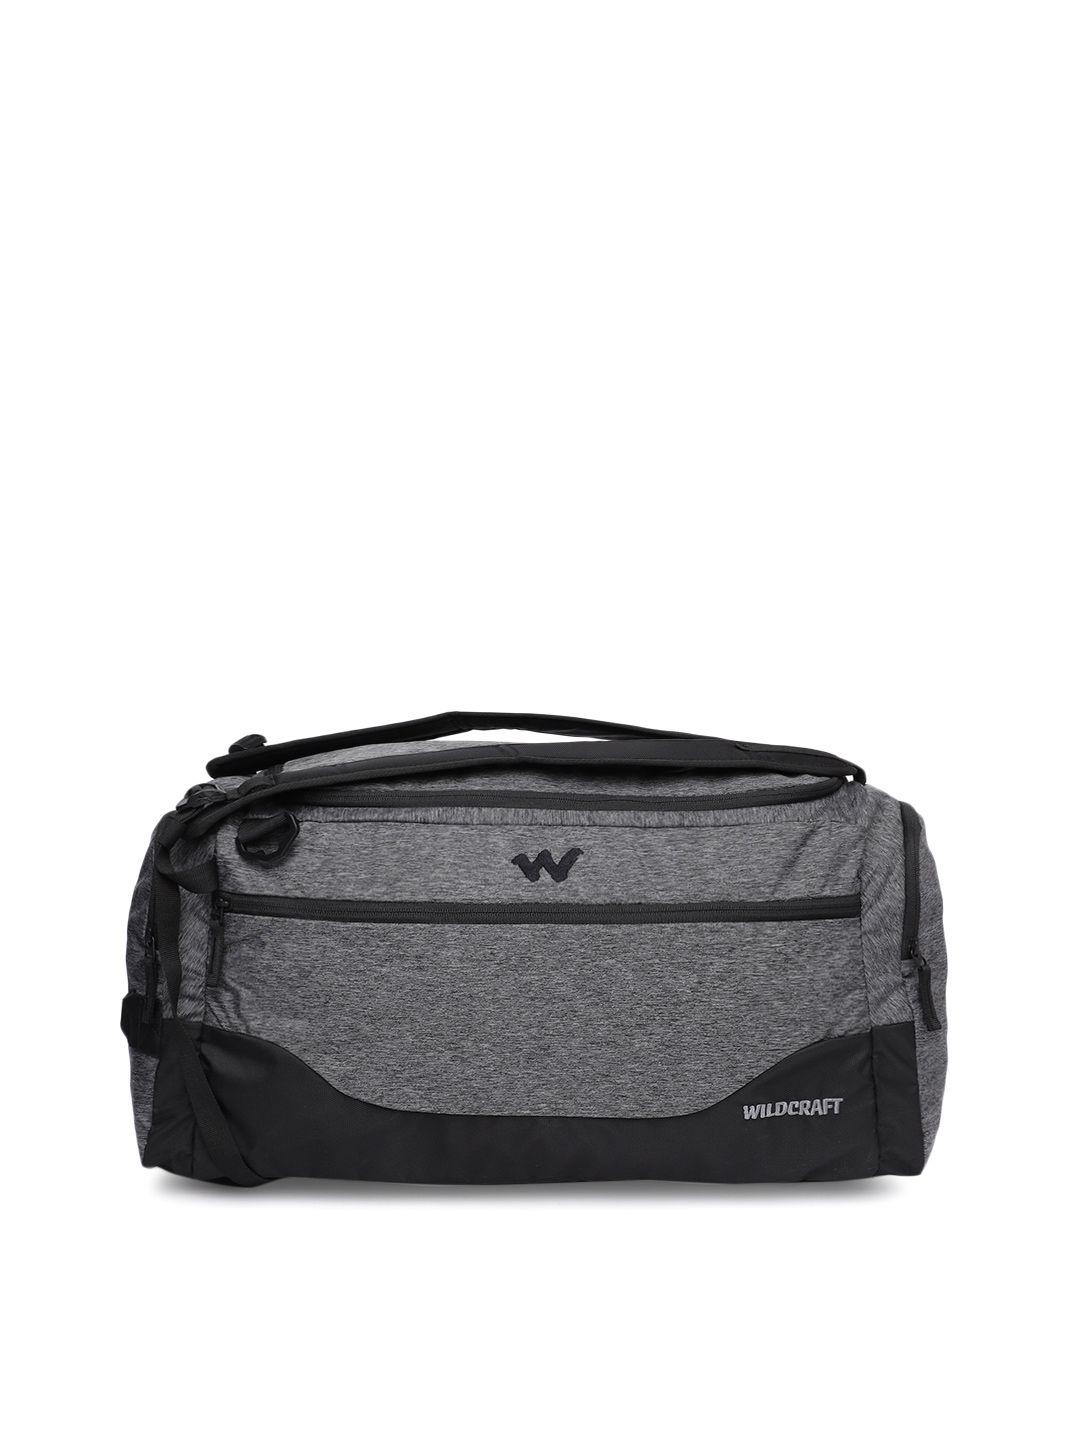 wildcraft unisex grey & black venturer colourblocked duffel bag